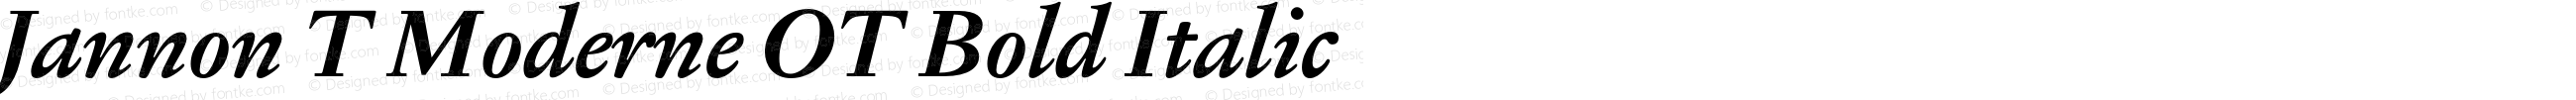 Jannon T Moderne OT Bold Italic